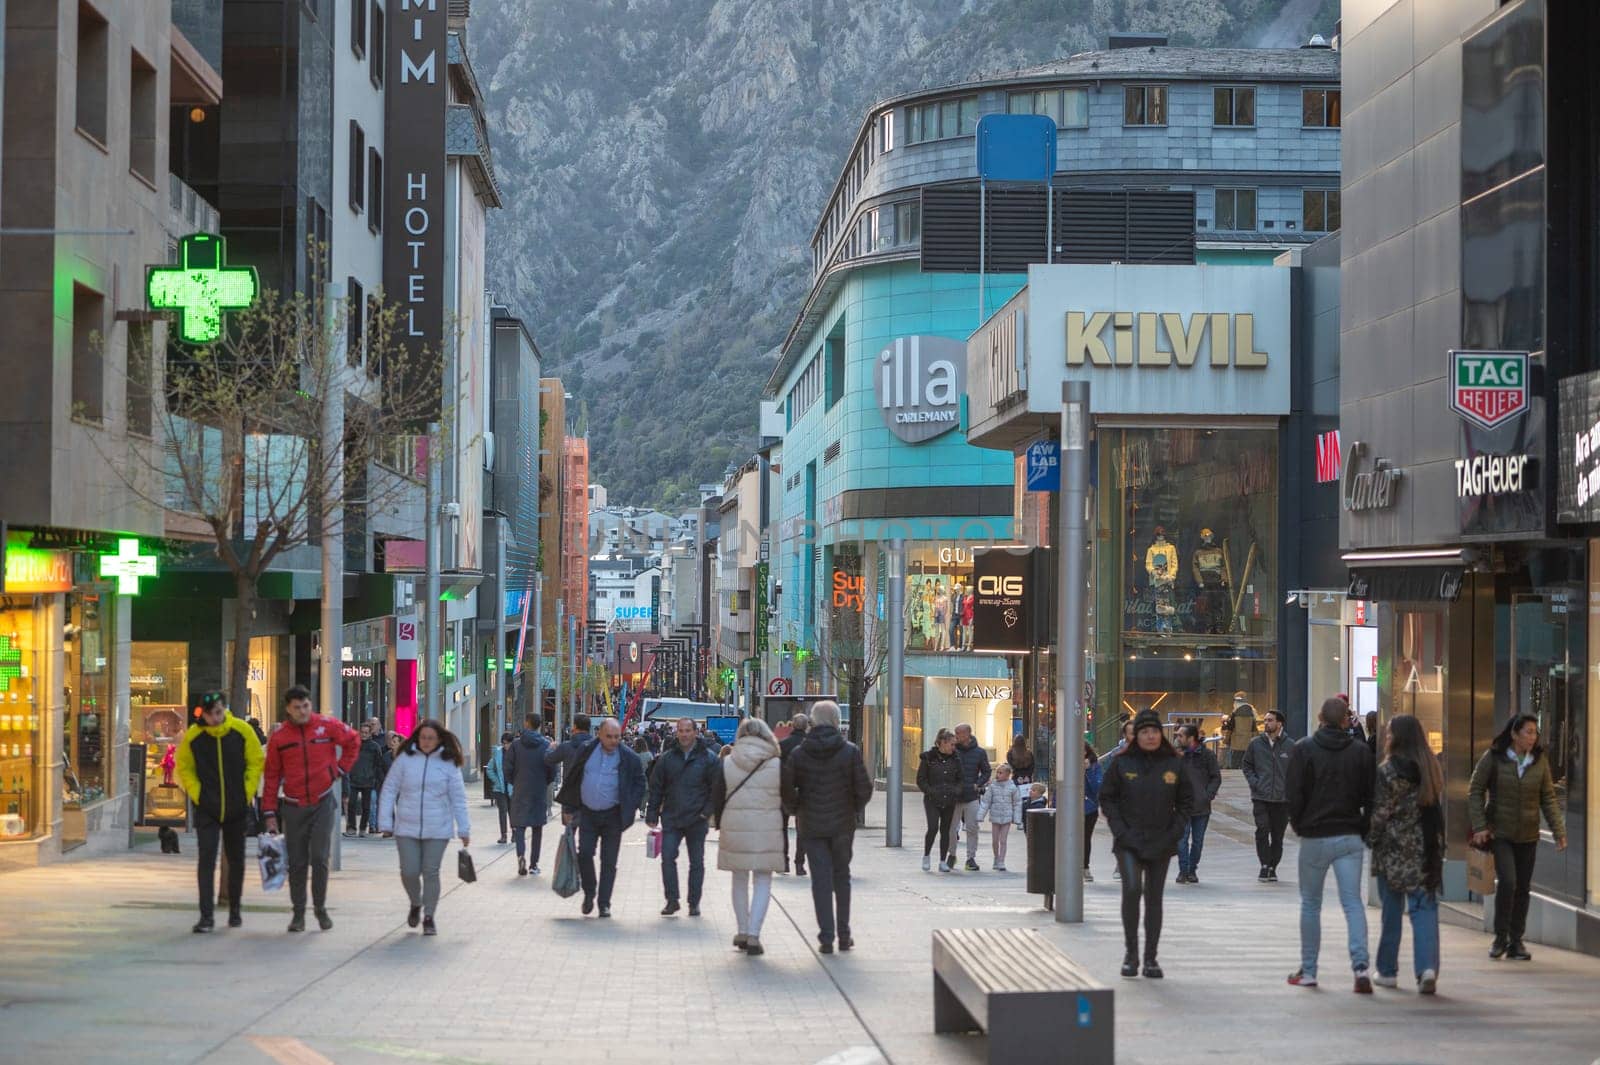 People Walk in the Comercial Street named Meritxell. Andorra la Vella, Andorra in winter. by martinscphoto